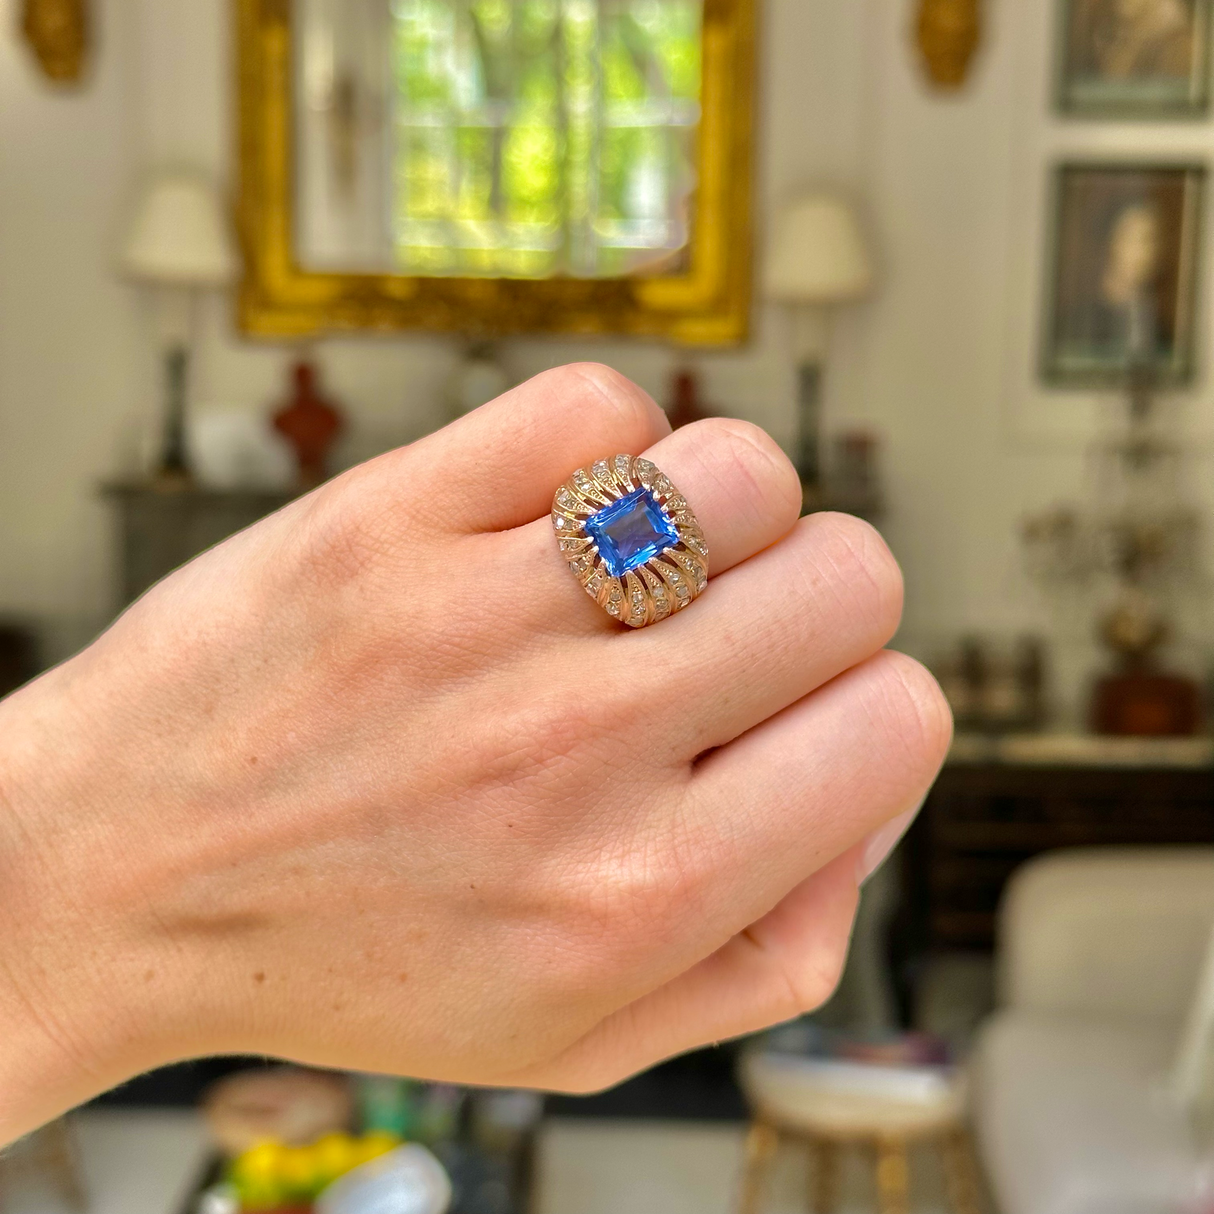 Vintage ceylon sapphire and diamond ring worn on closed hand. 